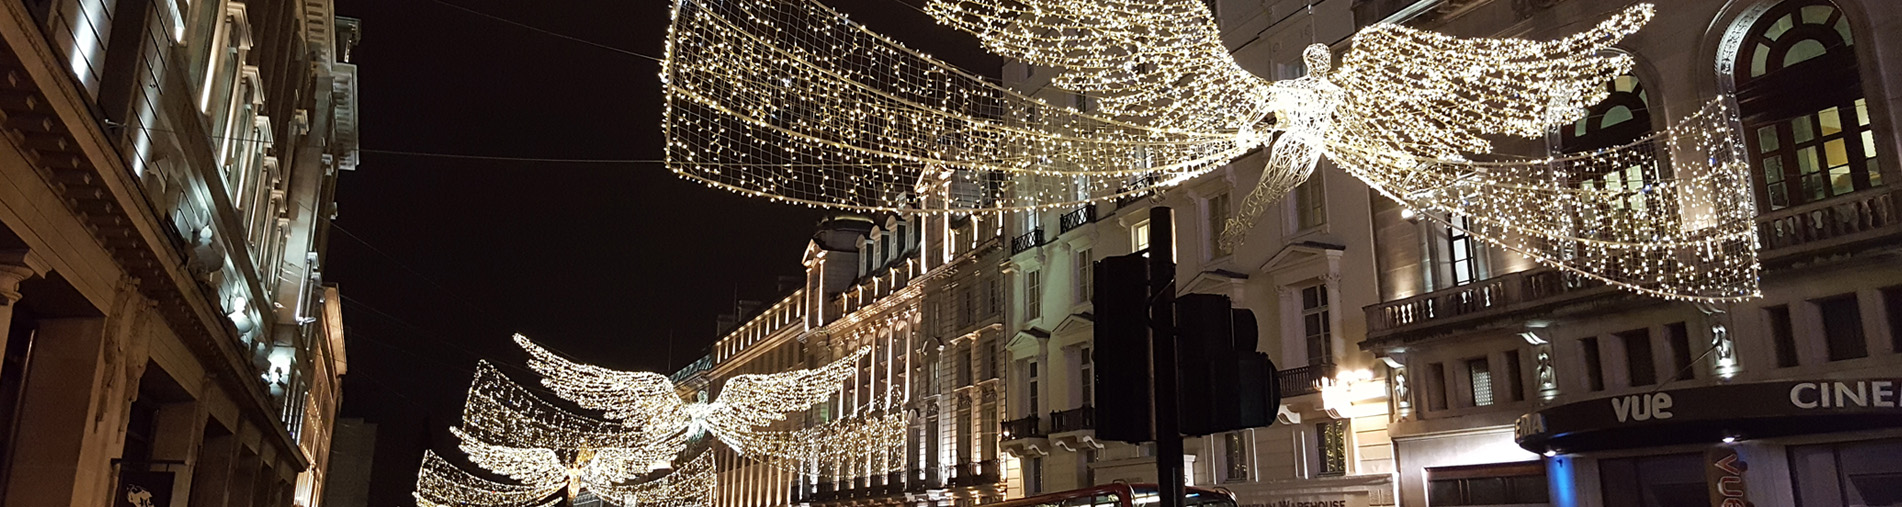 London's Regent Street Christmas Lights